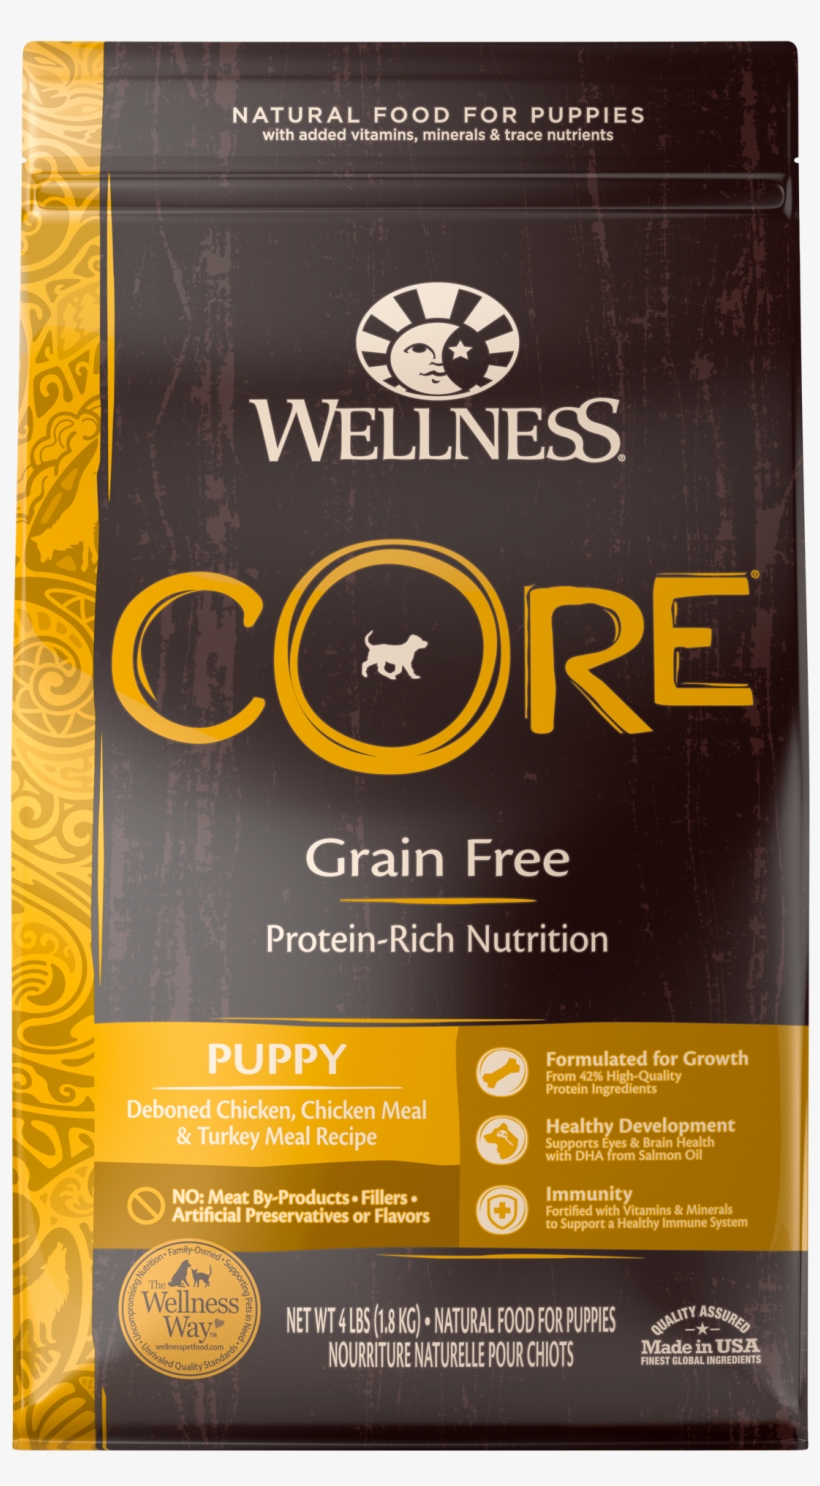 Core Puppy - Wellness Puppy, transparent png #1122397